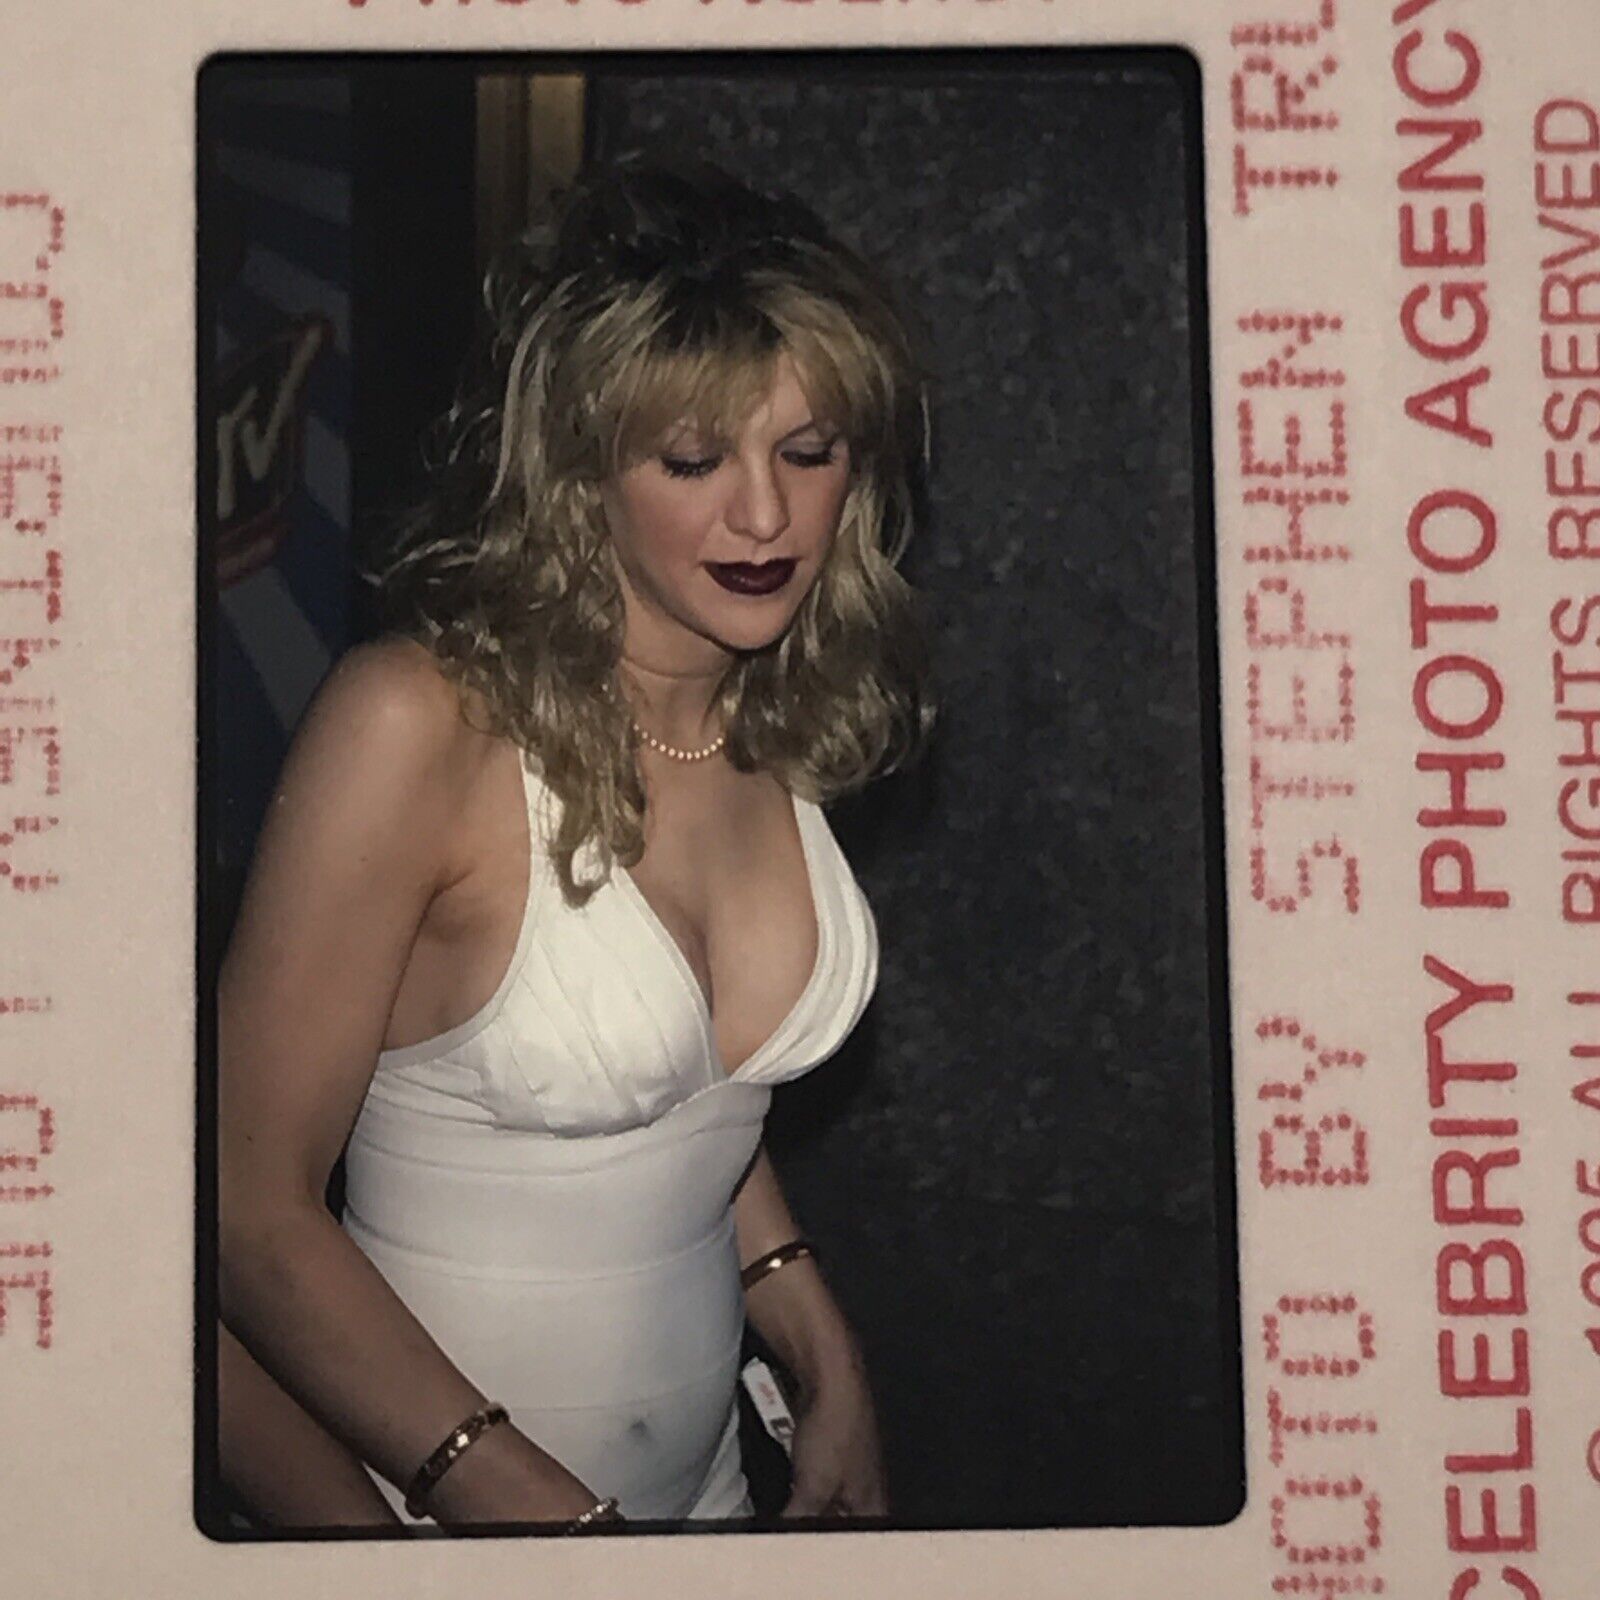 1995 Courtney Love at MTV Video Awards Photo Transparency Slide Nirvana Cobain